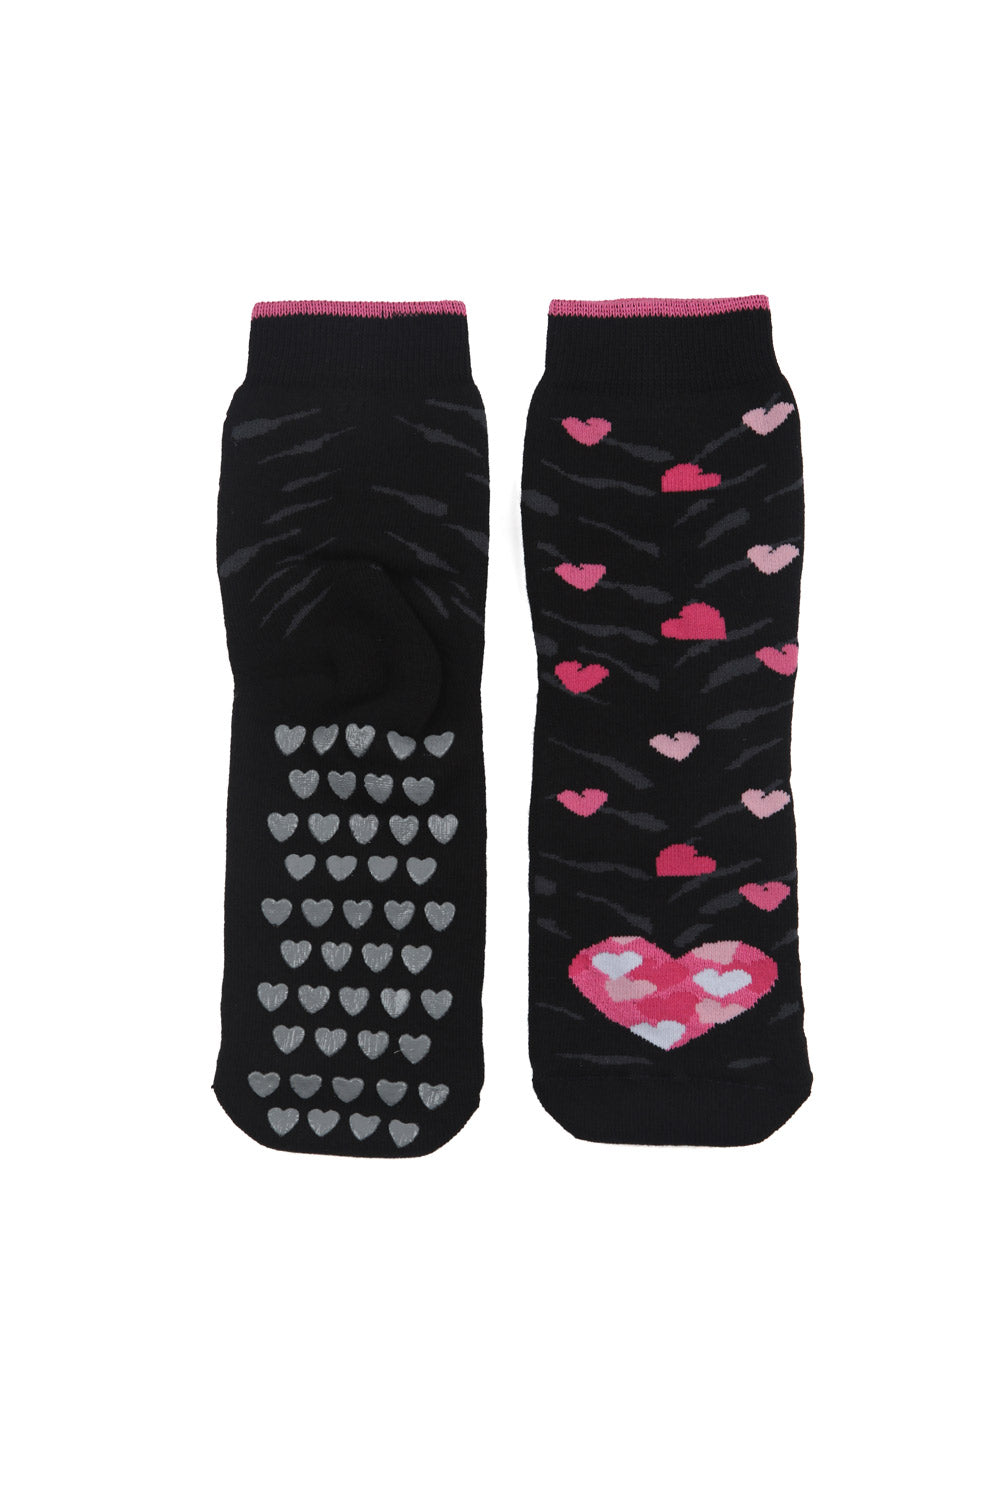 Zebra and Hearts Anti-Slip Home Socks